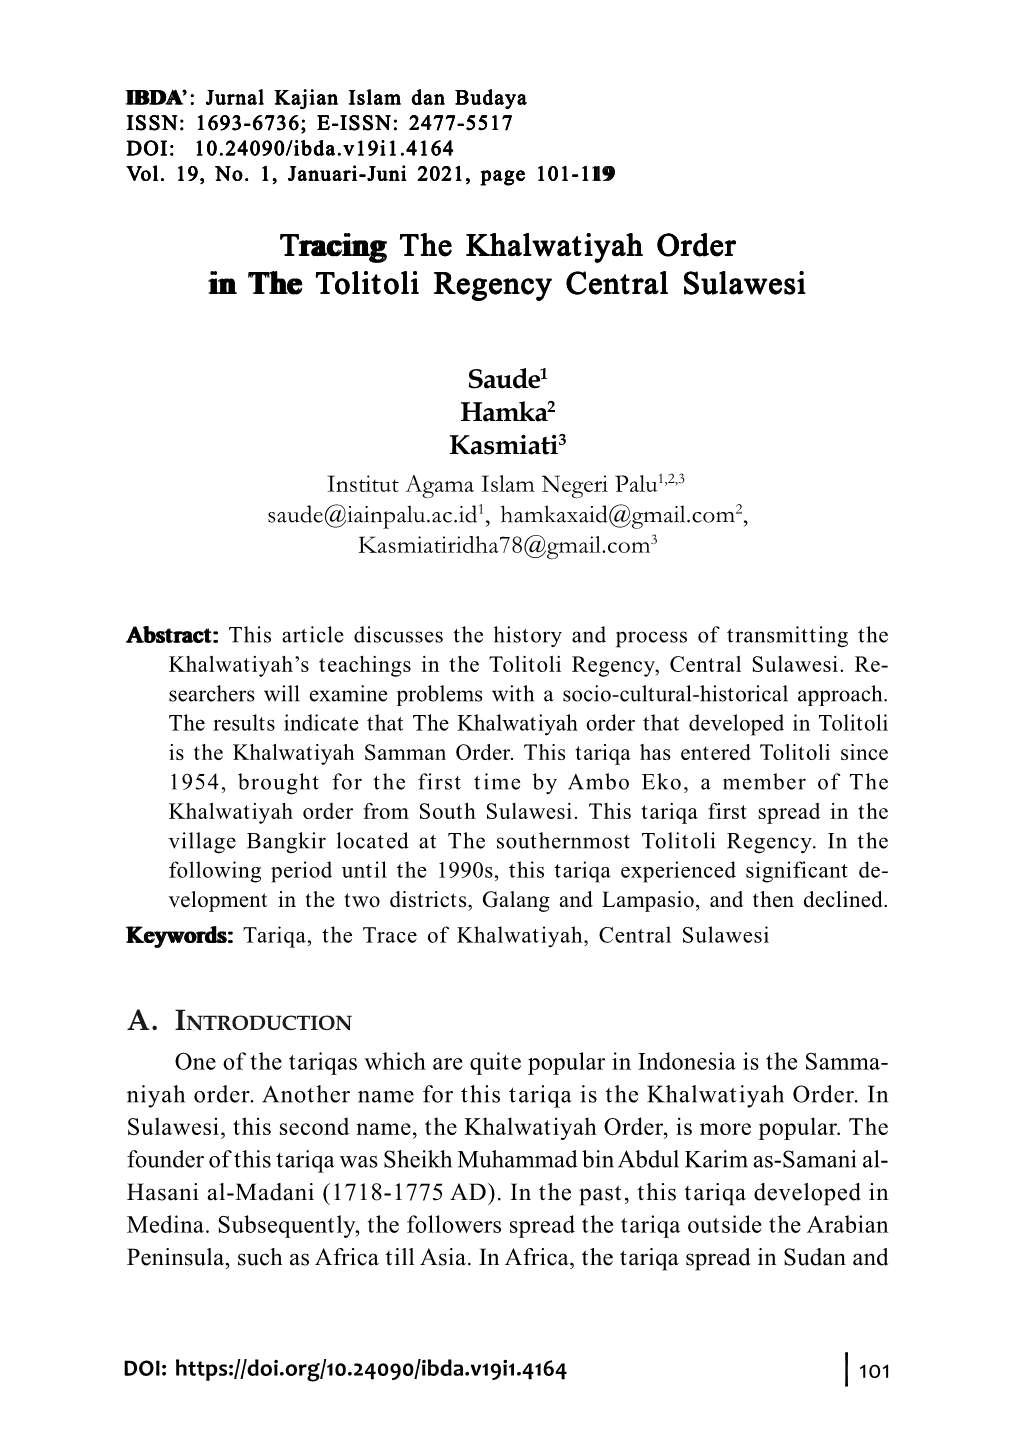 Tracing the Khalwatiyah Order the Khalwatiyah Order in the Tolitoli